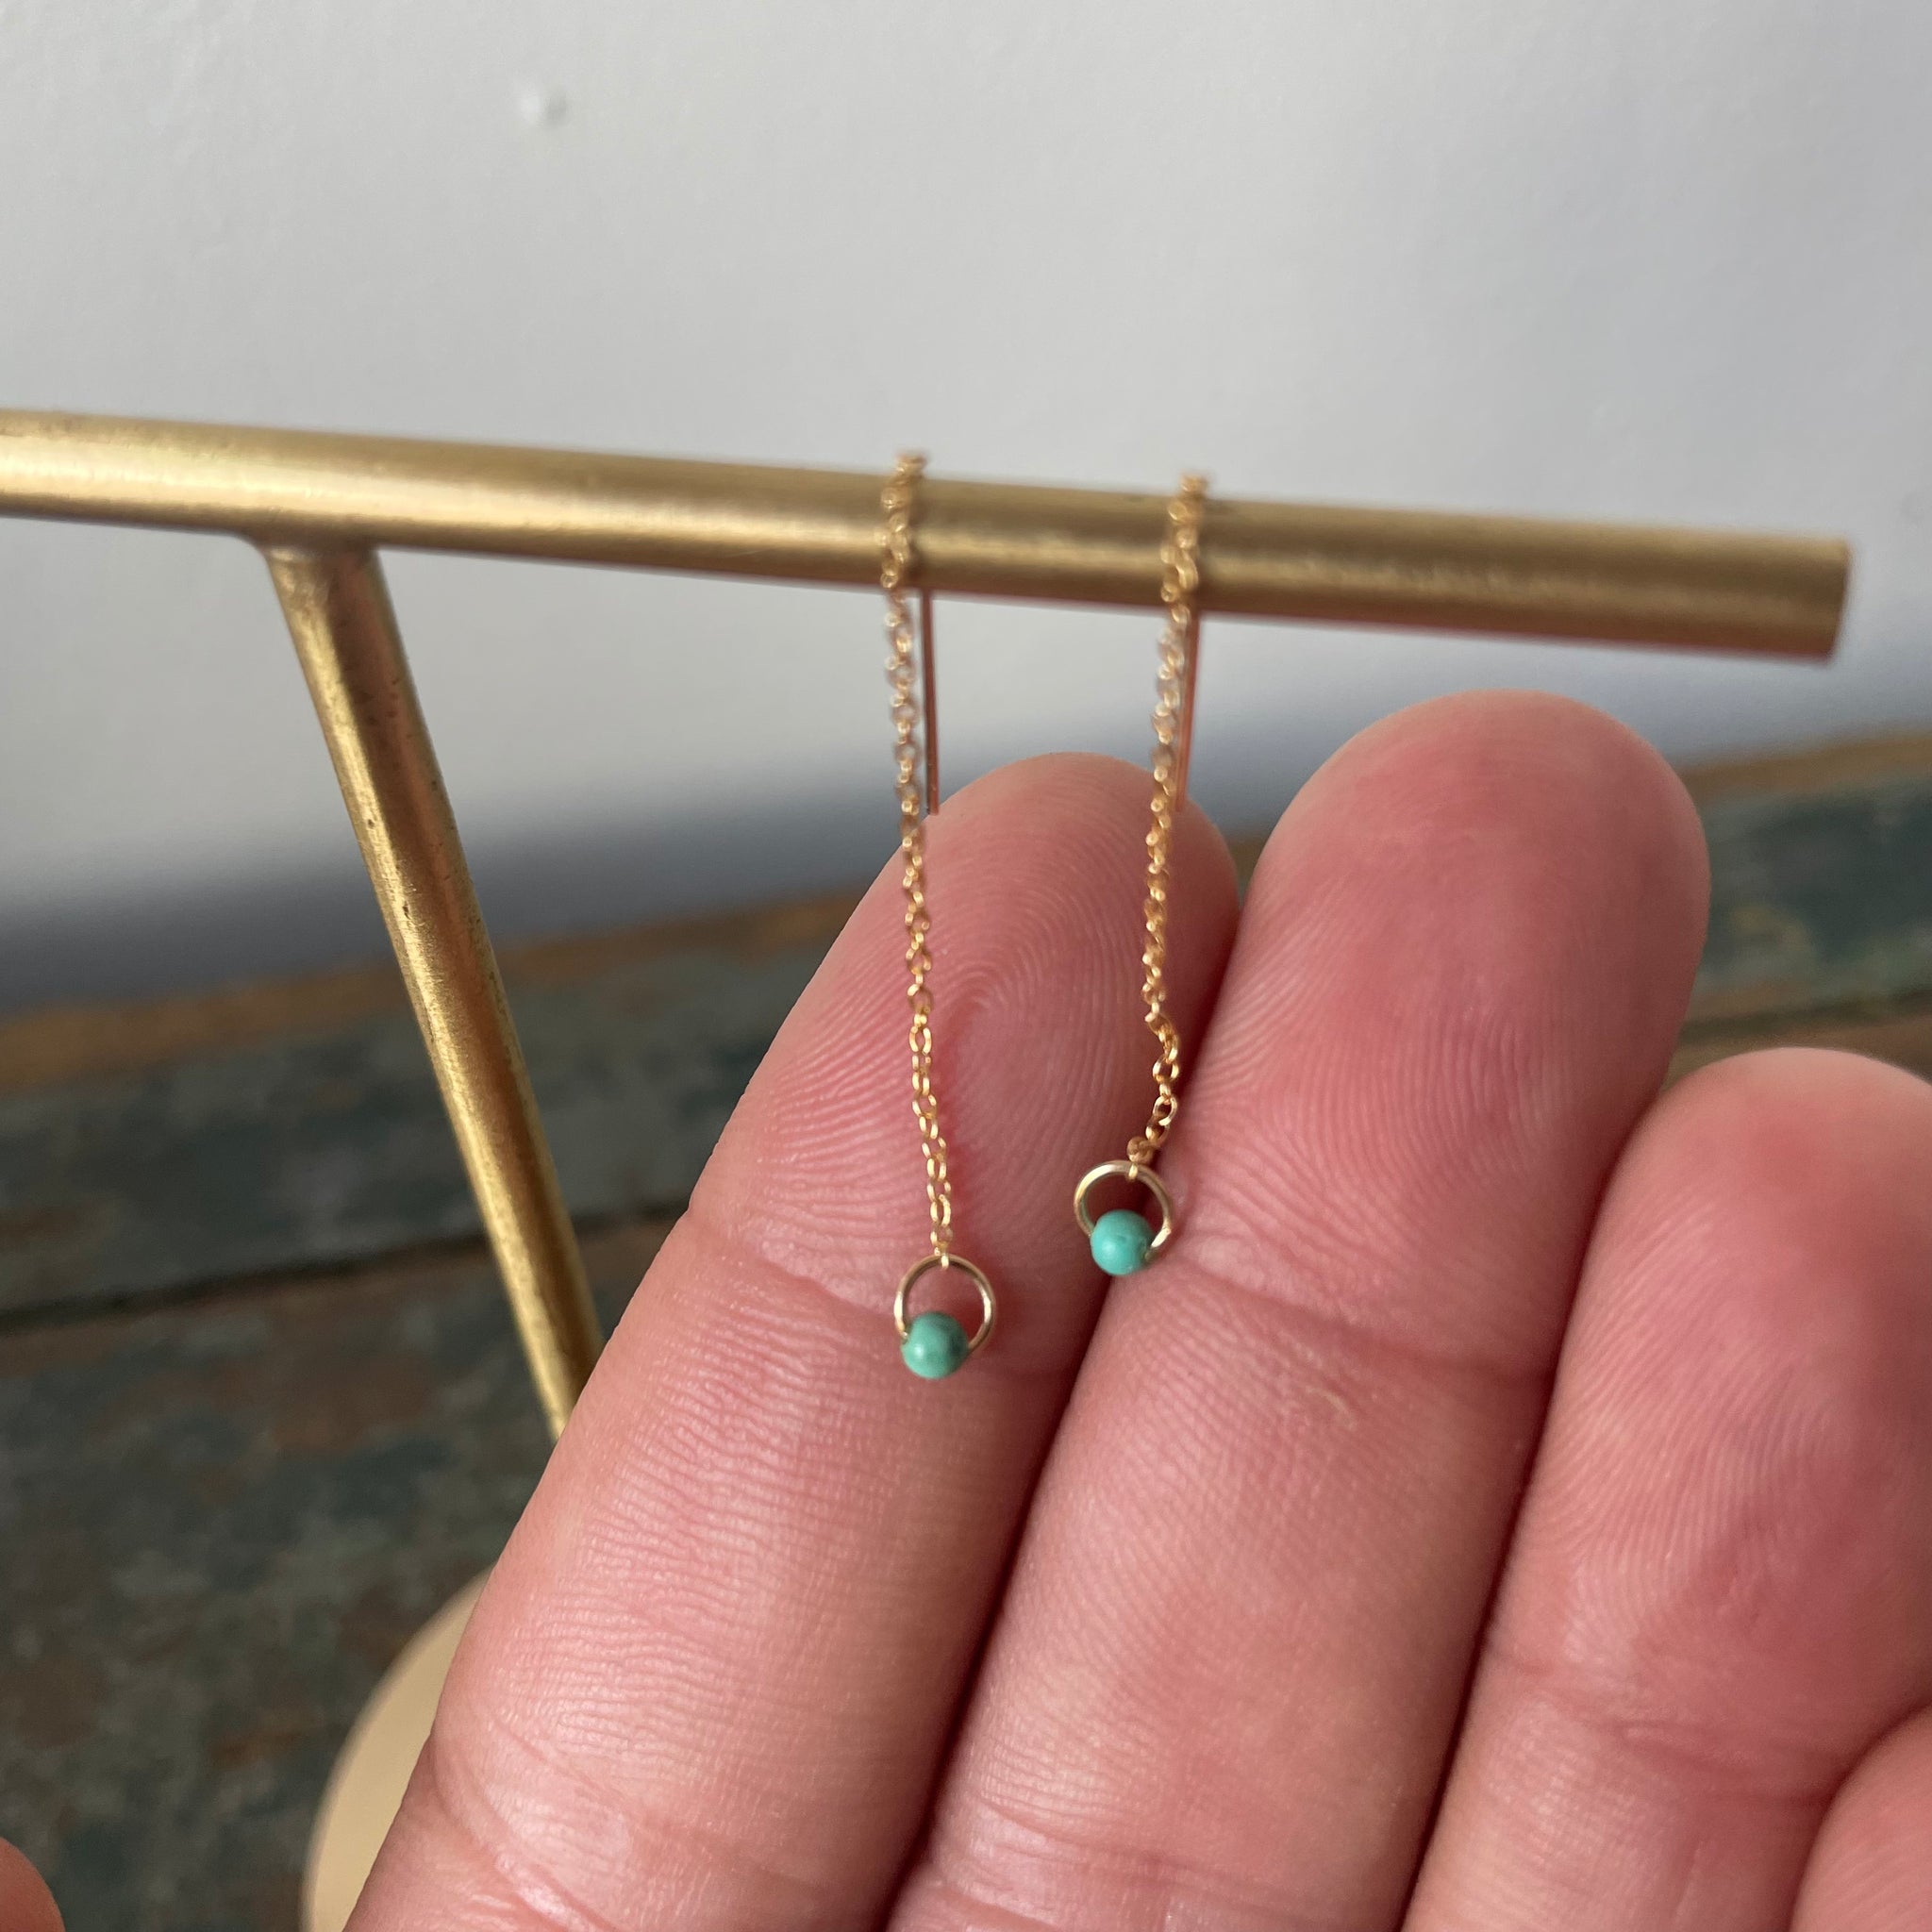 Turquoise 14k Gold Fill Threader Earrings by 8.6.4 Design